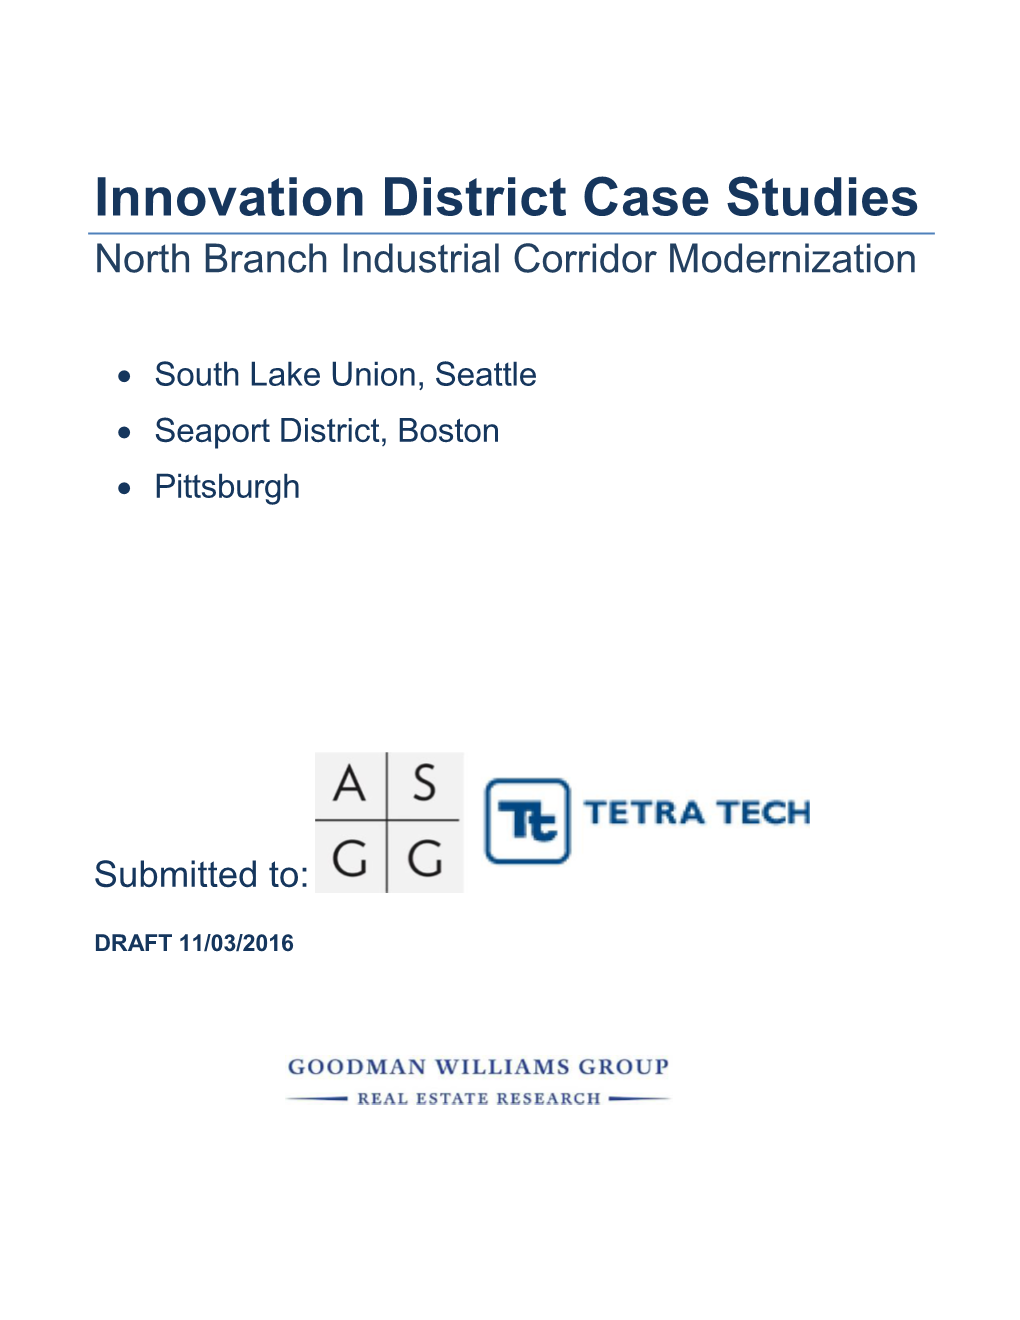 Innovation District Case Studies North Branch Industrial Corridor Modernization